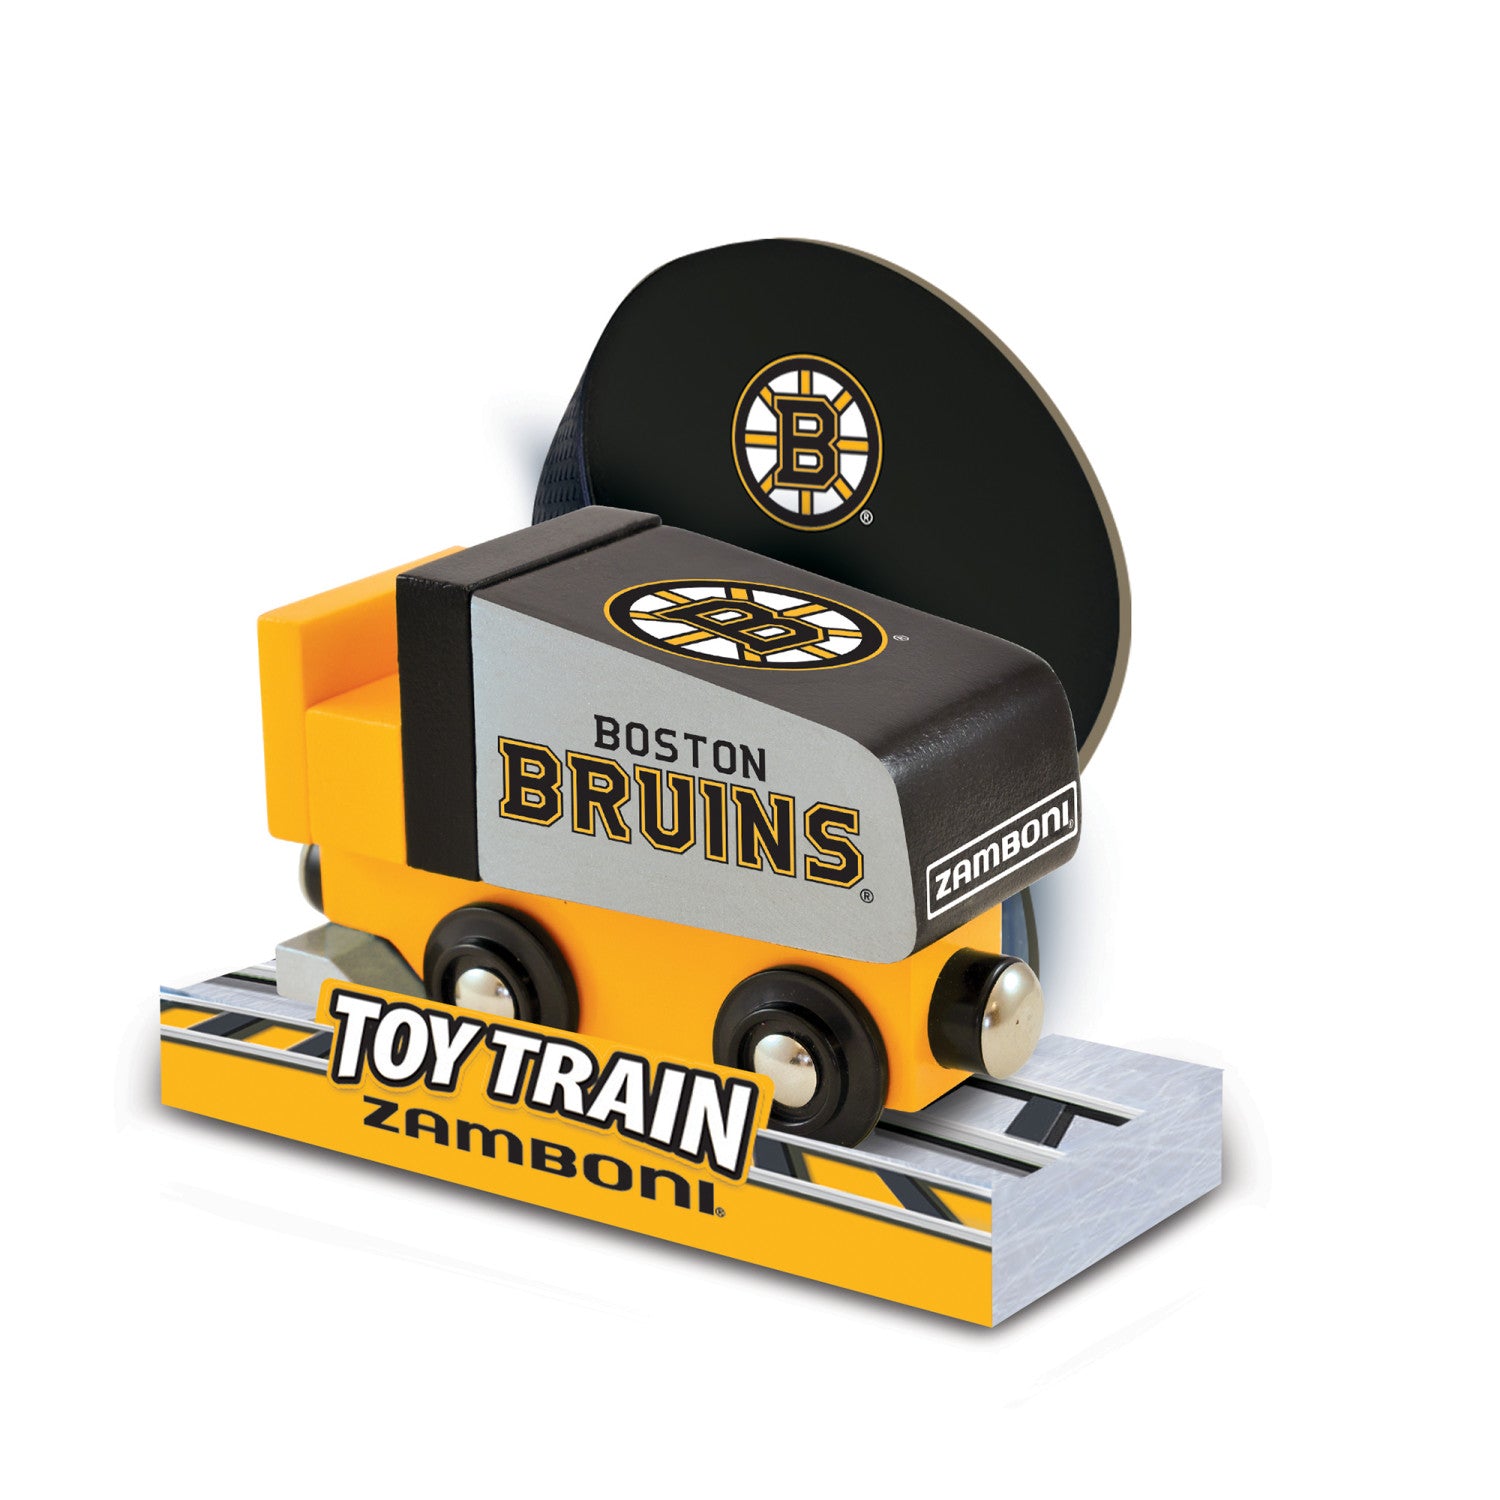 Boston Bruins Toy Train Engine